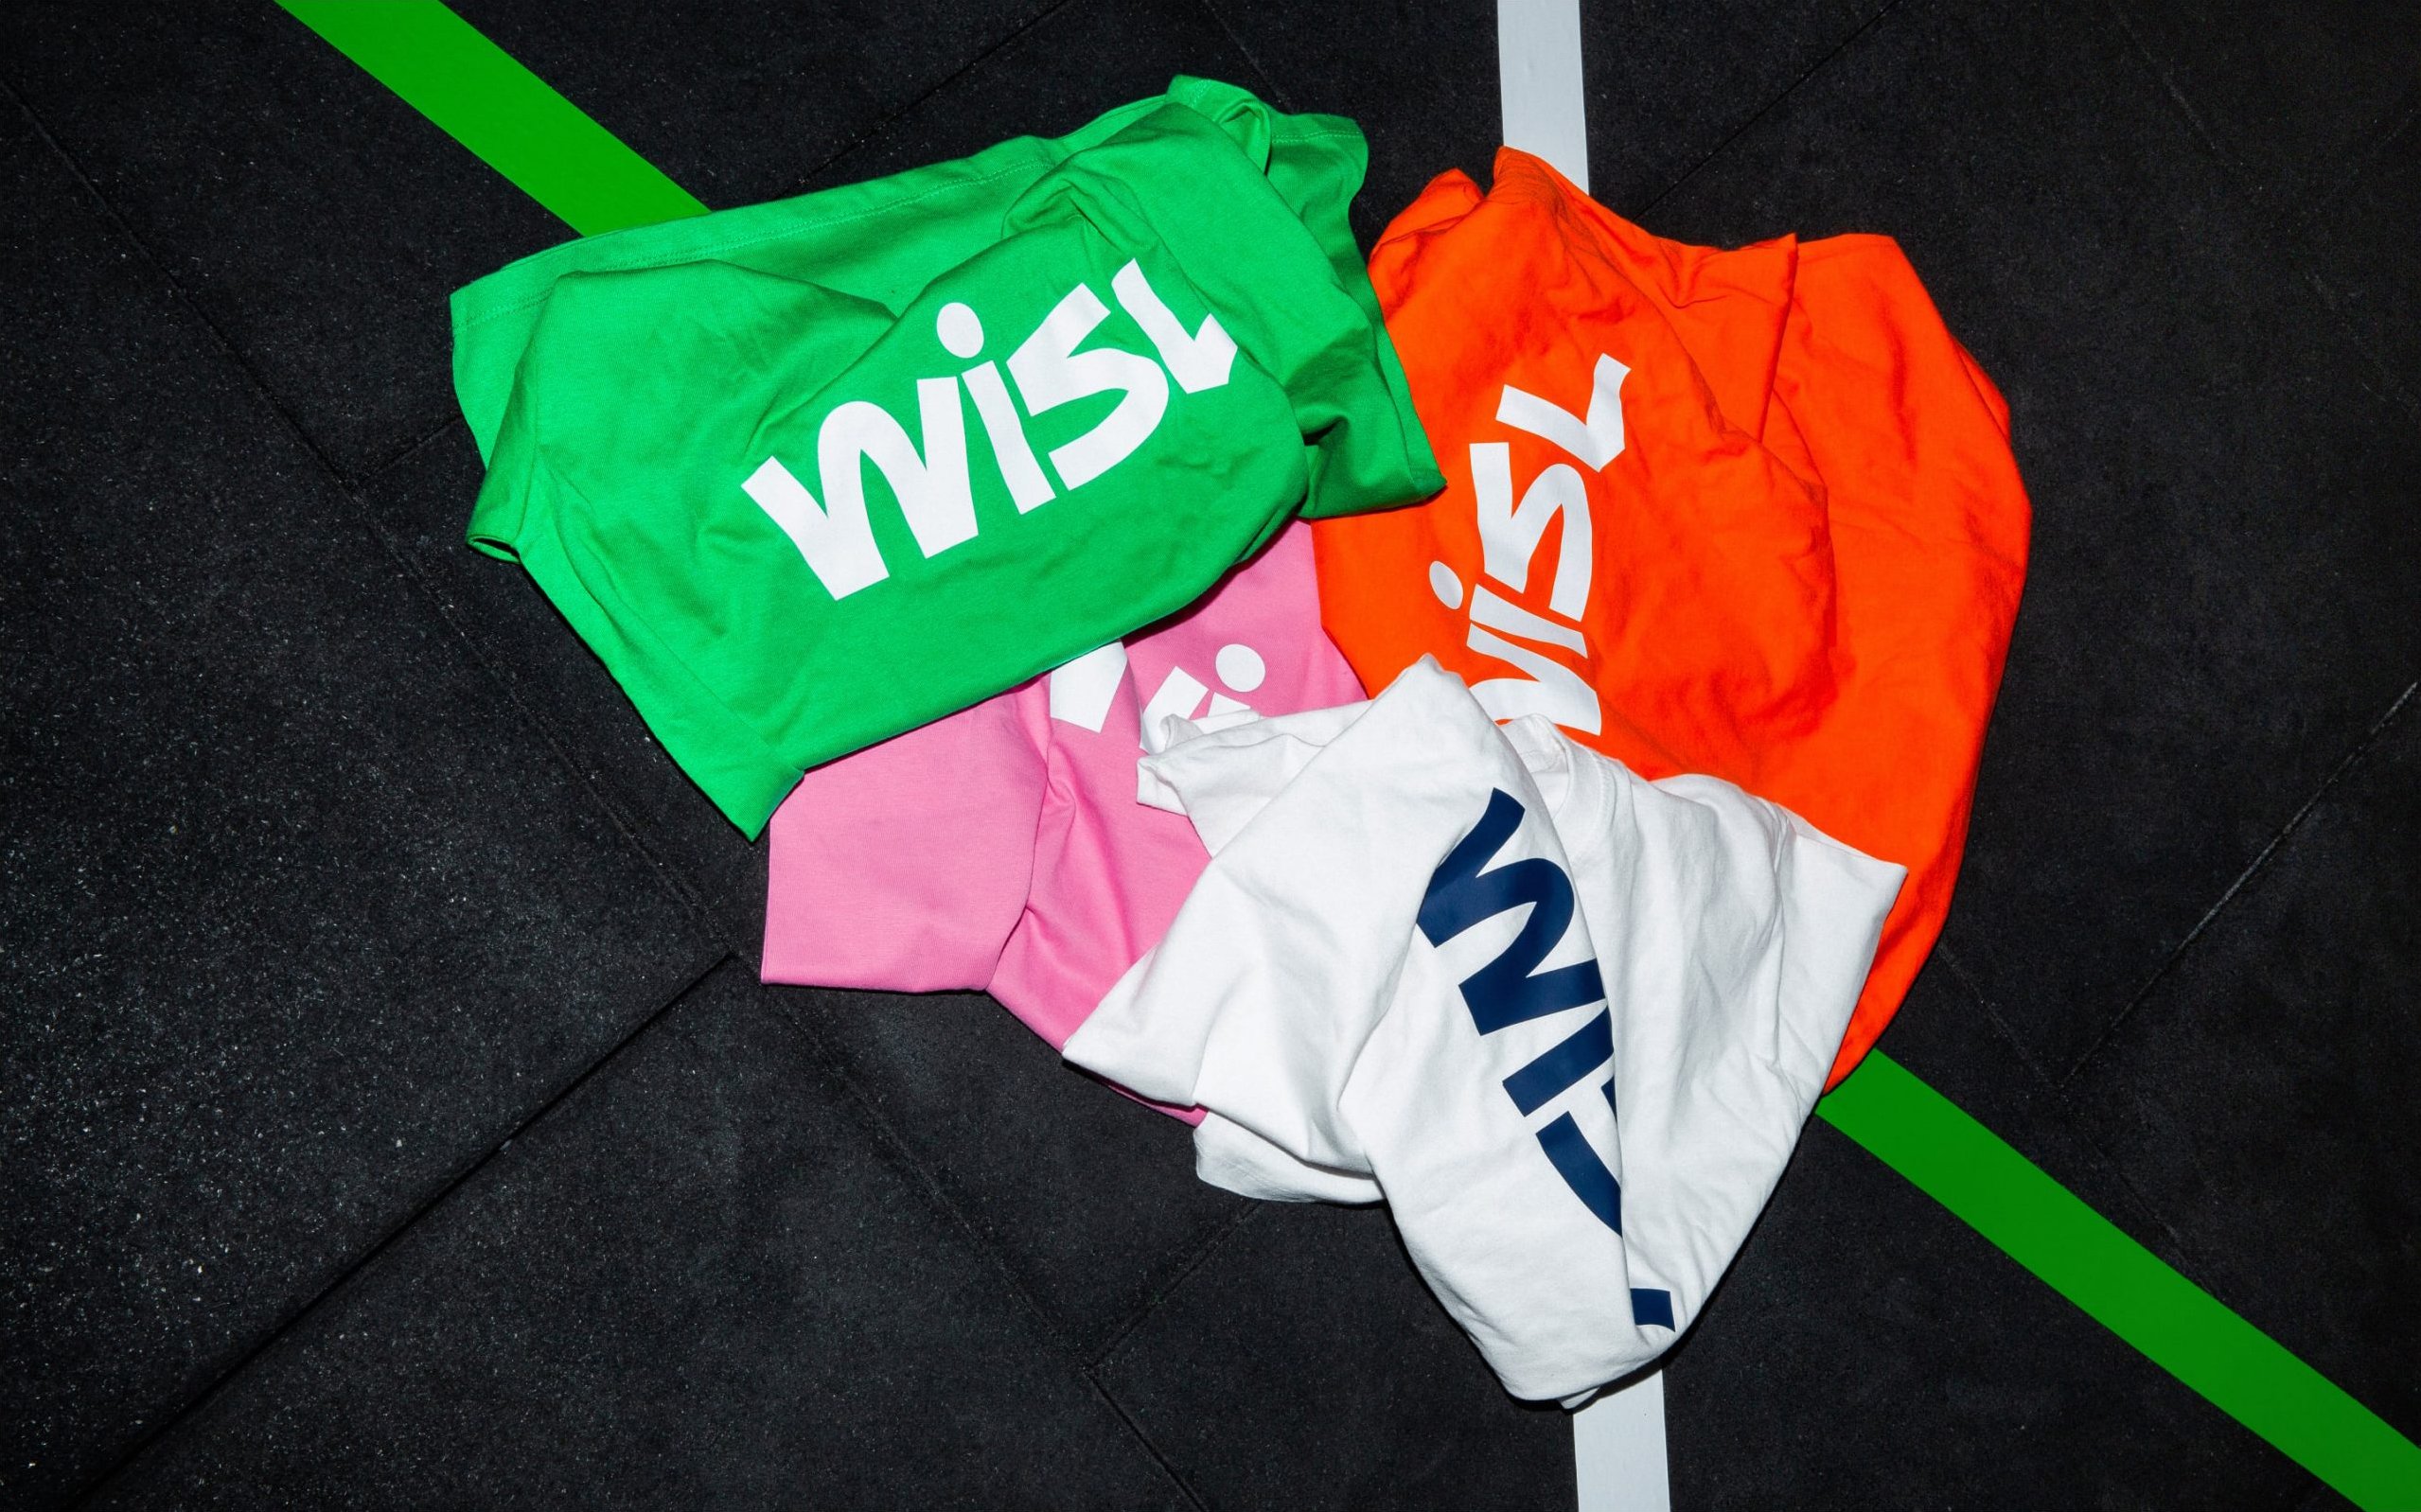 Logo, brand identity and app for social sports community platform Wisl designed by Lithuanian studio andstudi